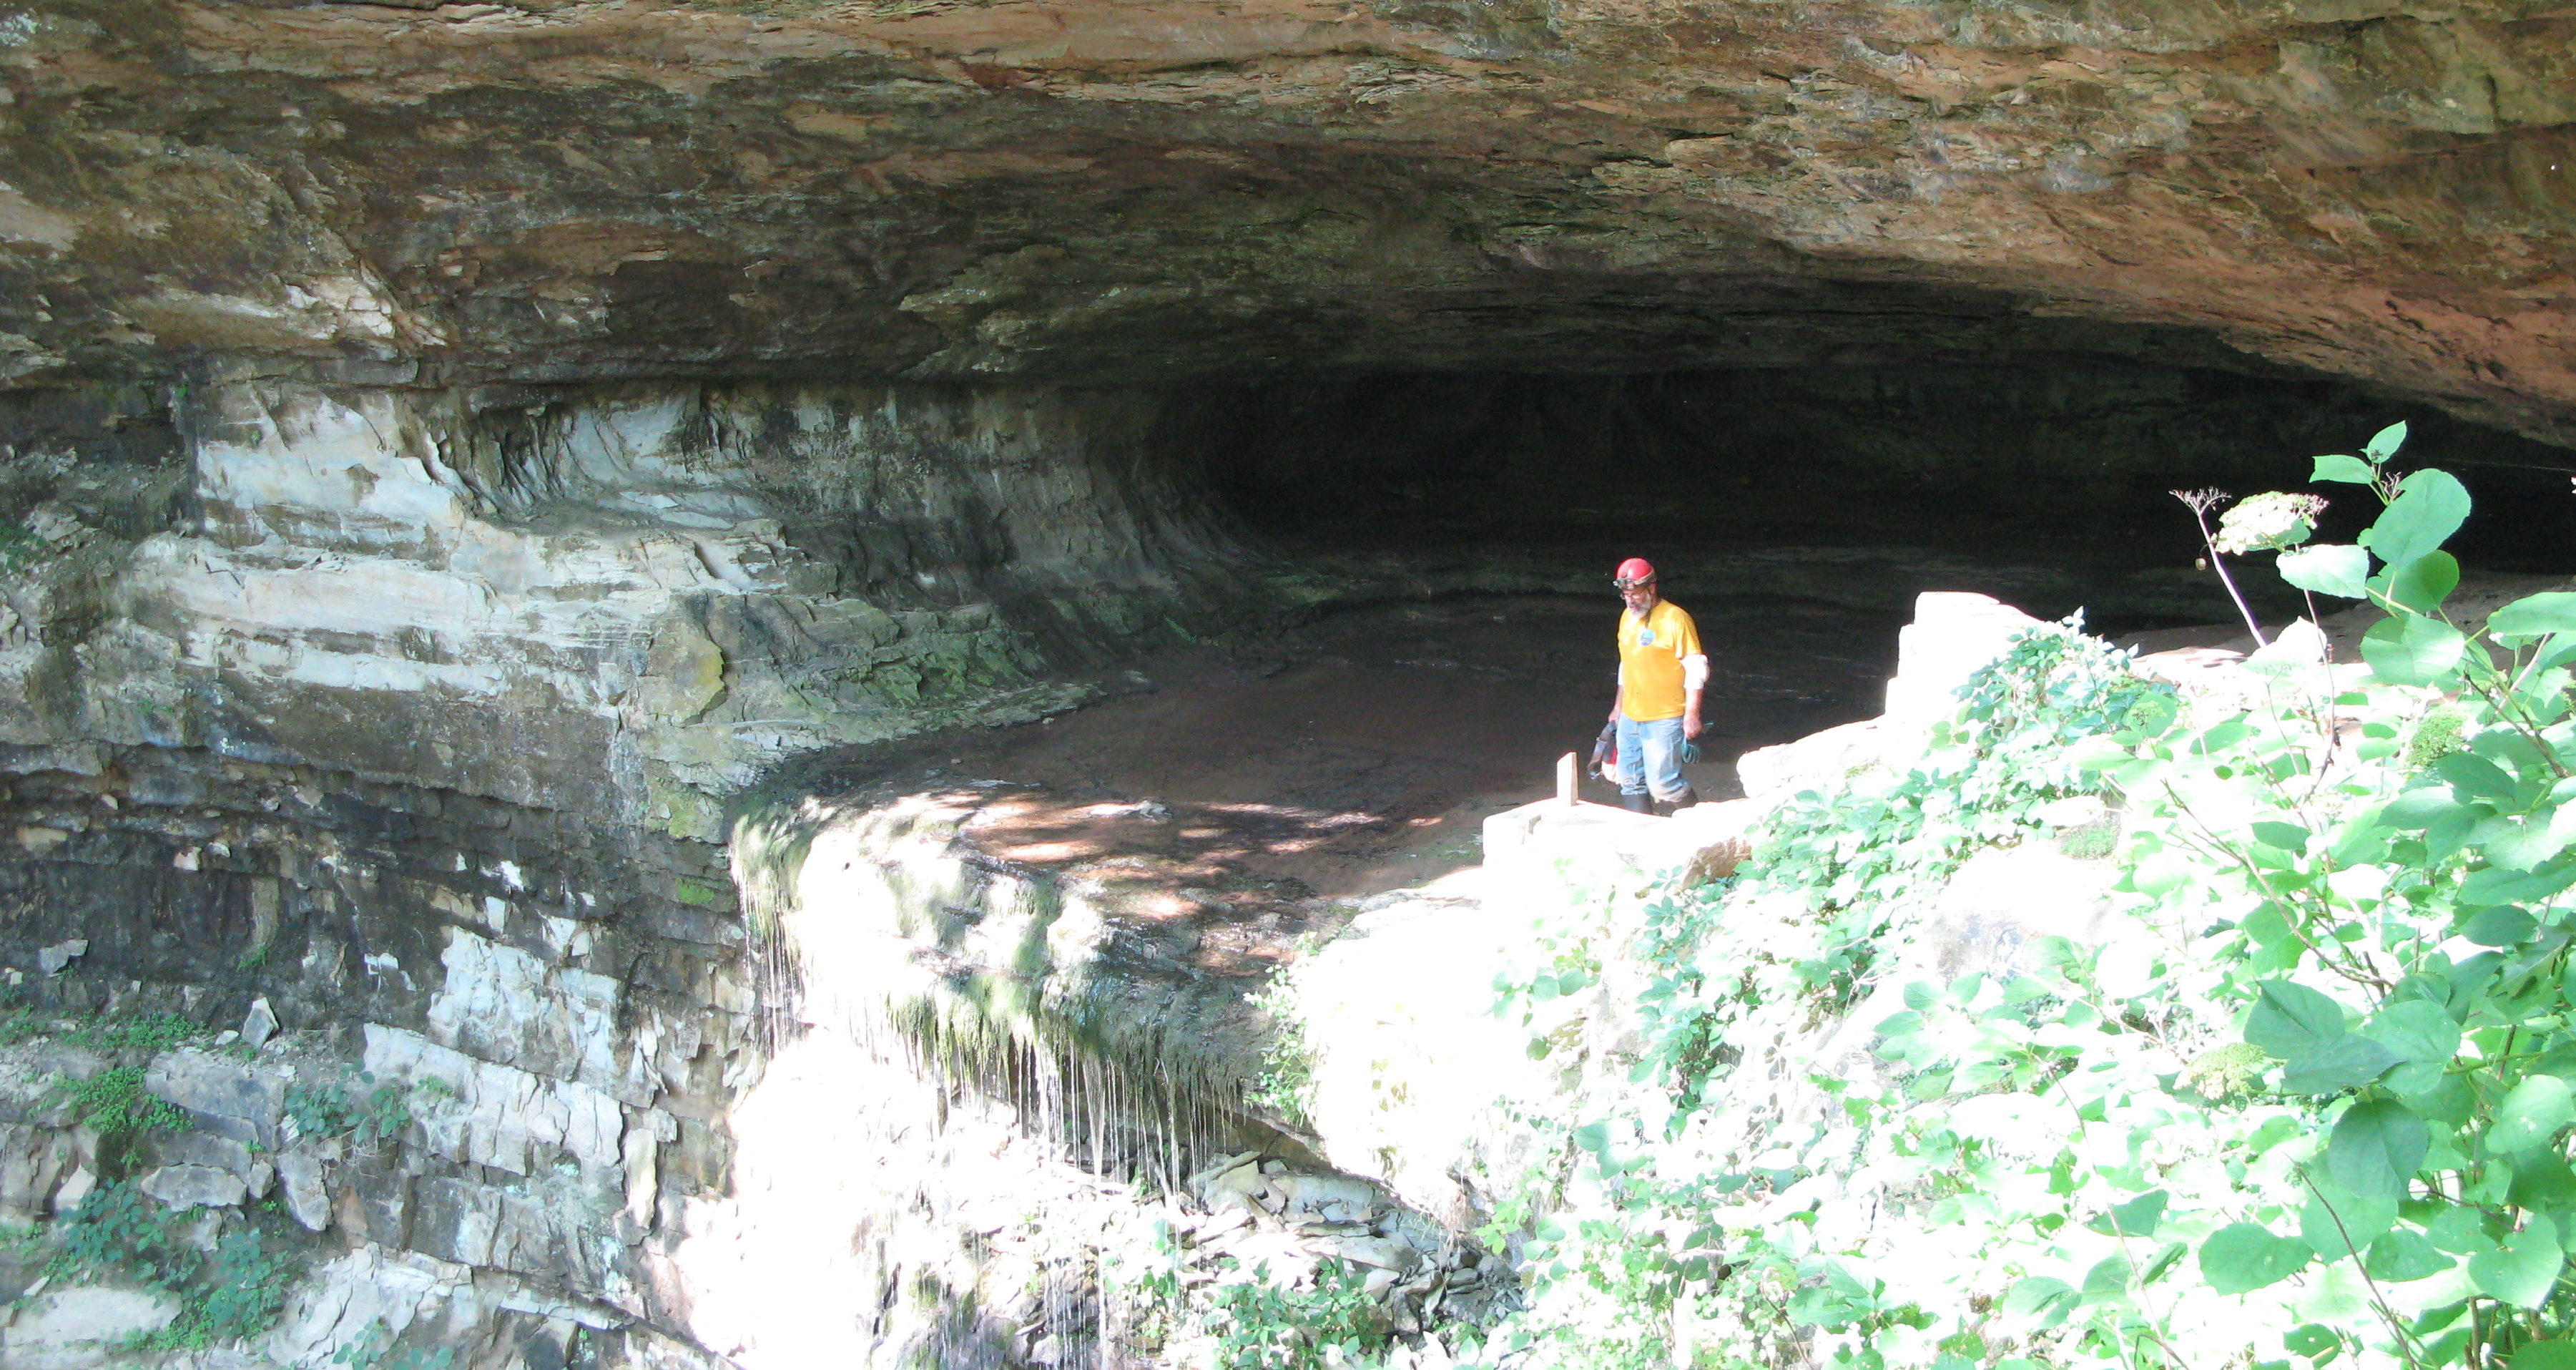 Porter Cave entrance, Indiana